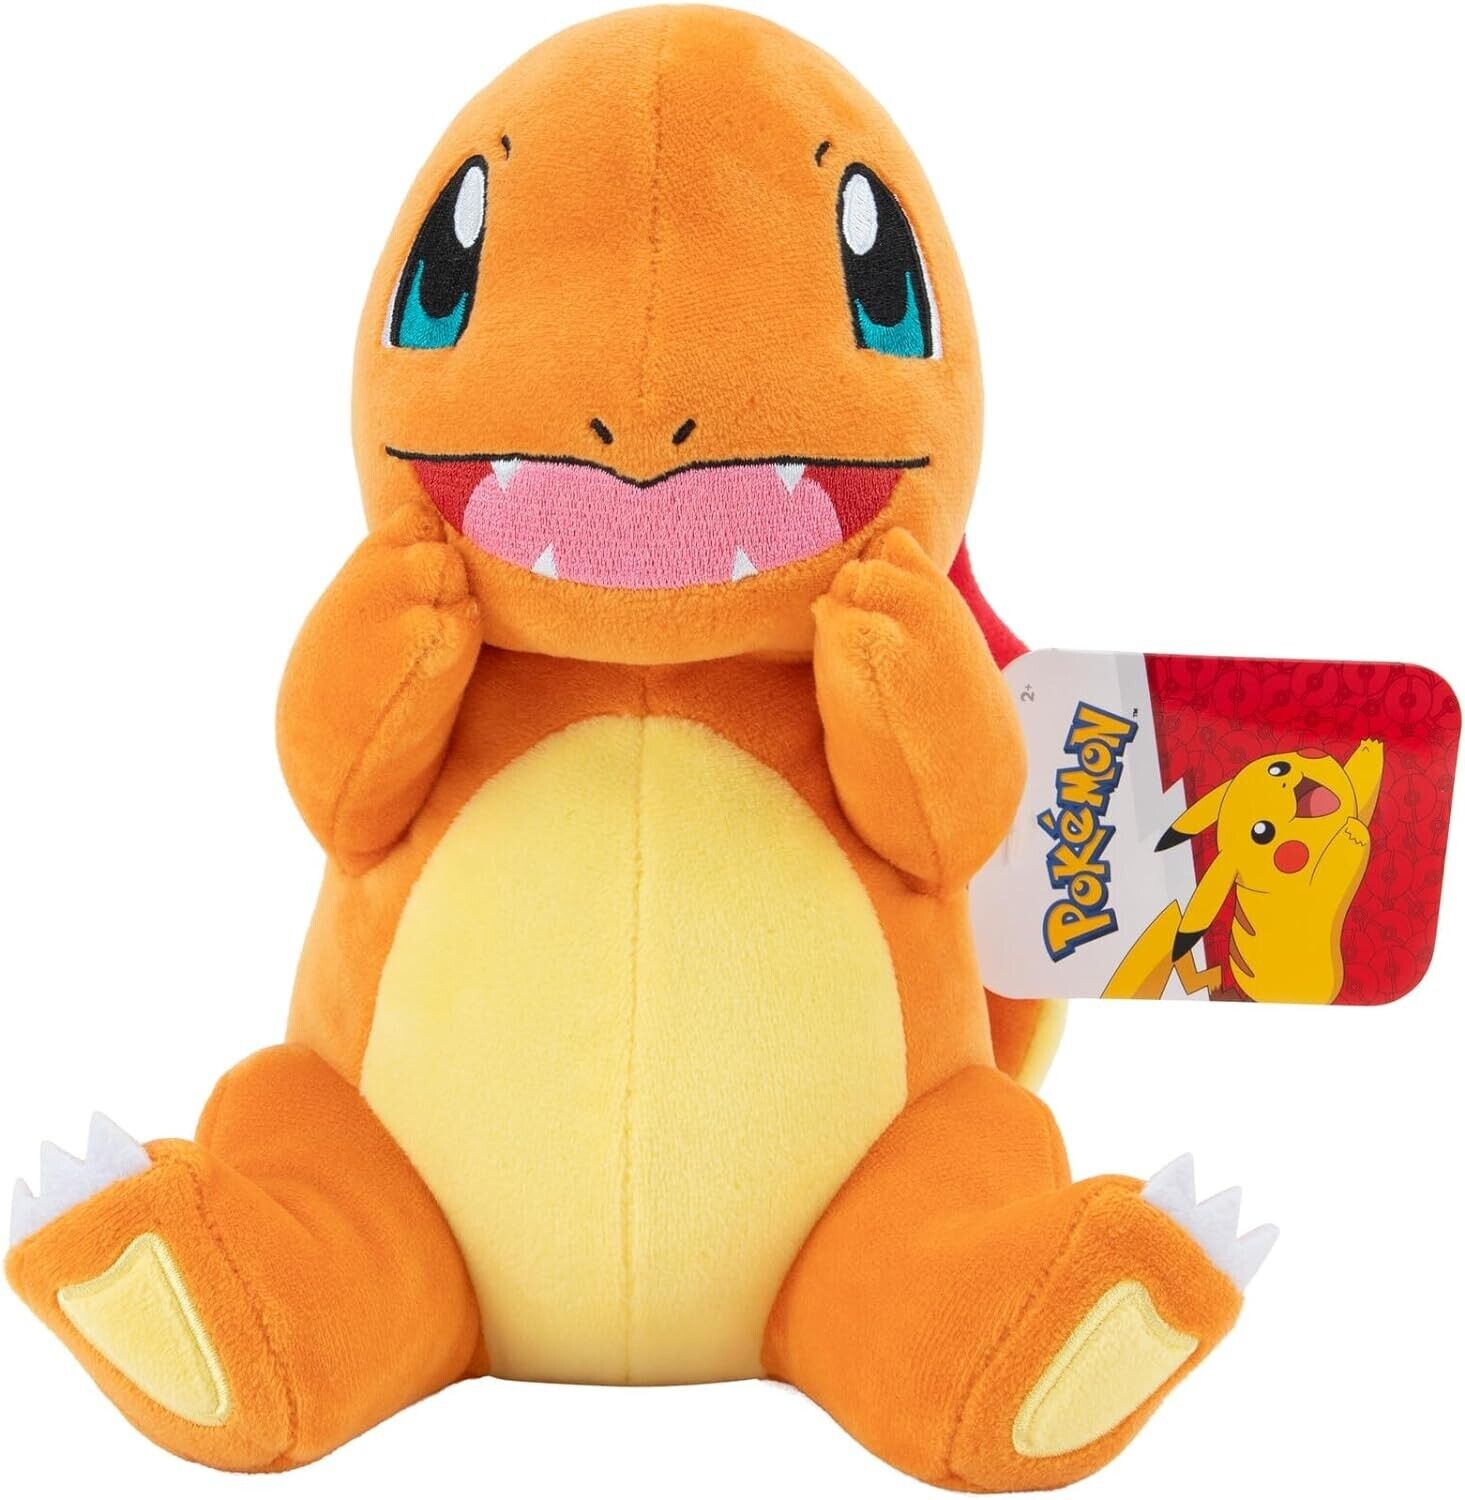 Pokémon Official & Premium Quality 8-inch Charmander Adorable, Ultra-Soft, Plush